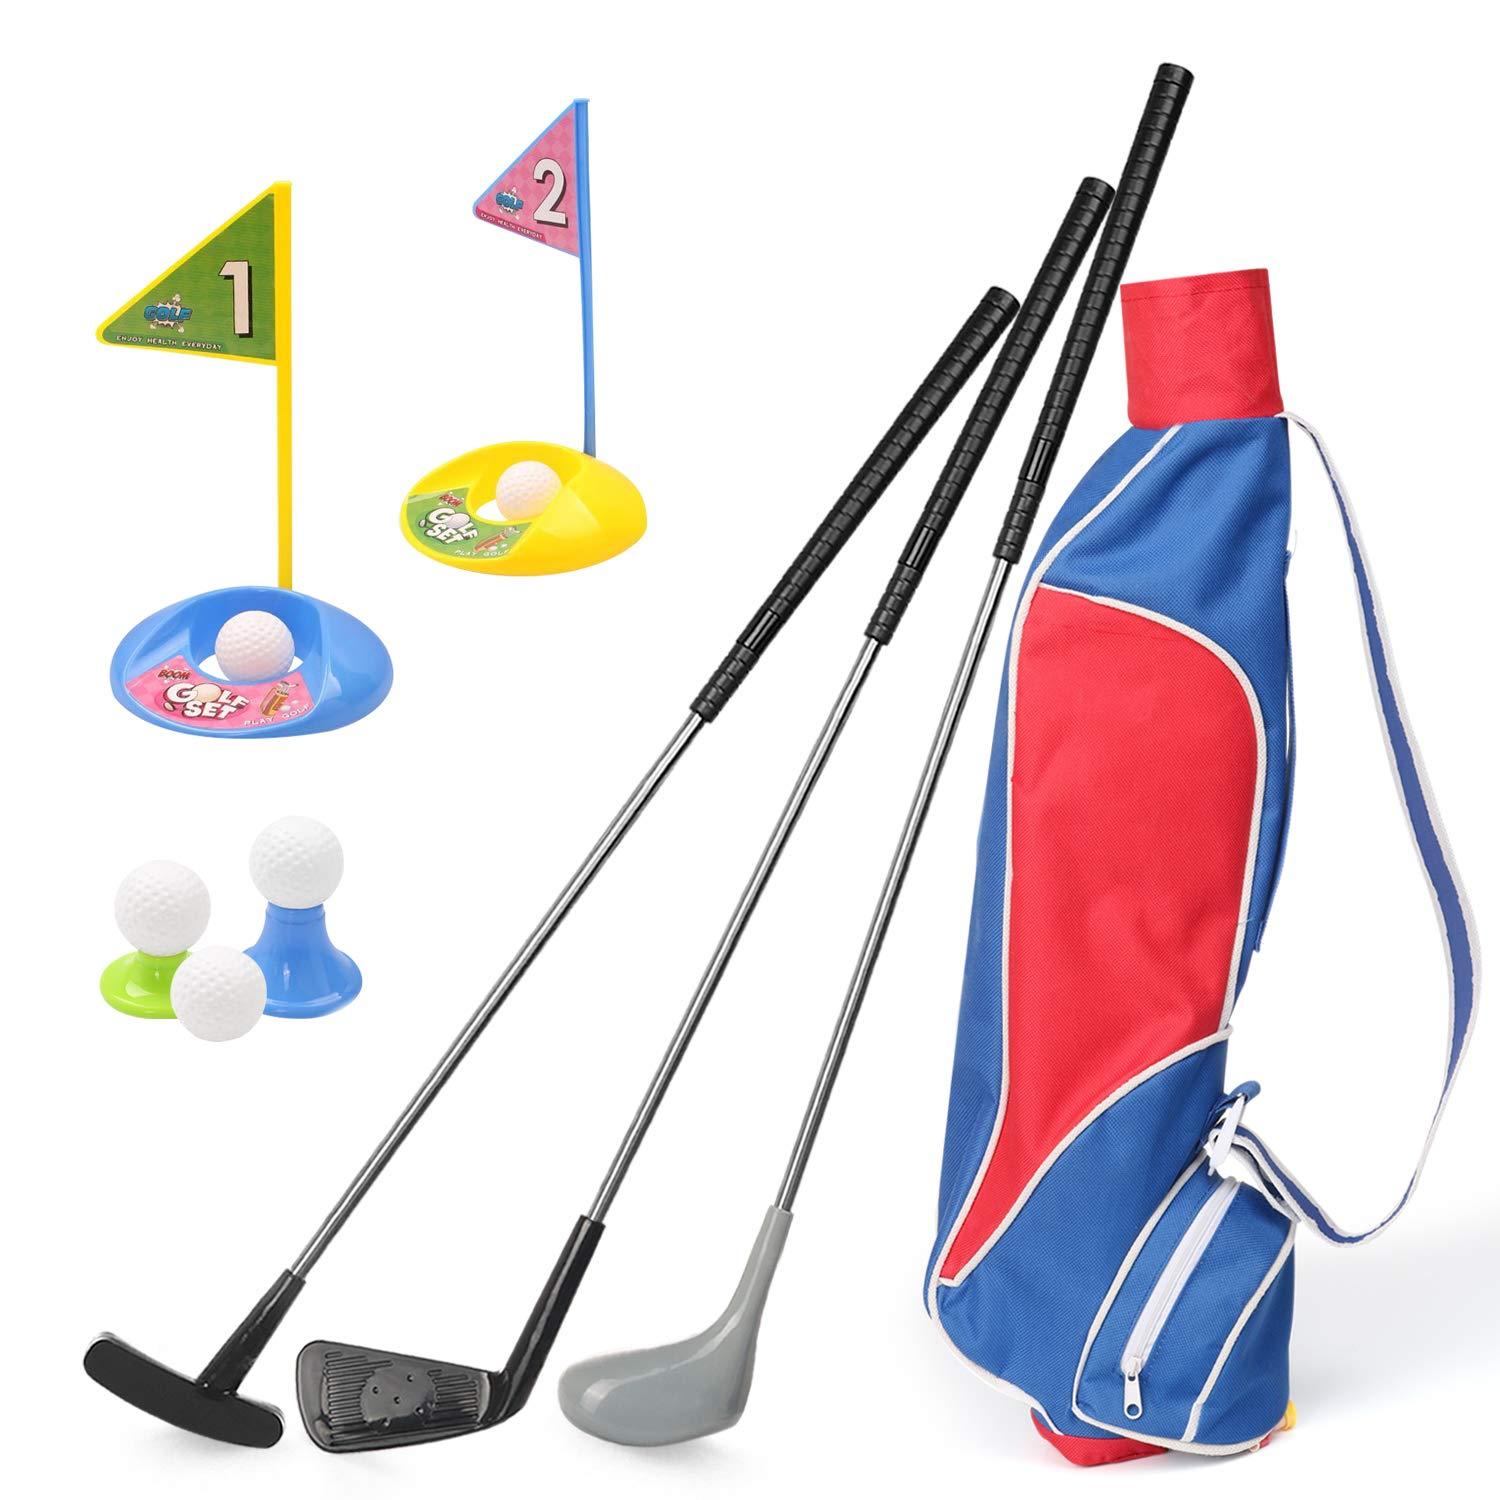 Kids Golf Clubs Set - Young Golfer Club Set - The Golfing Eagles